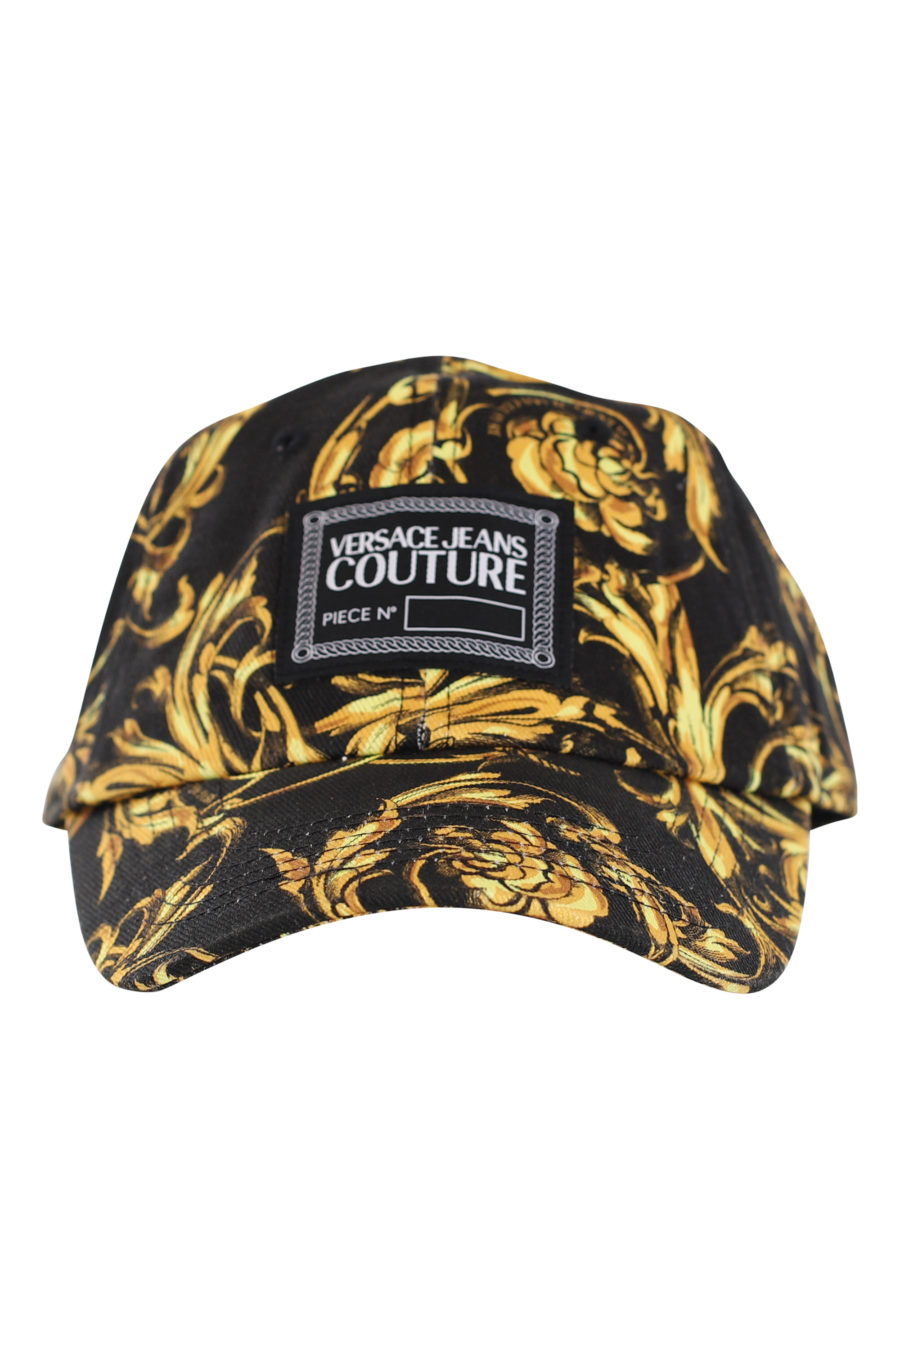 Gorra negra con estampado barroco dorado - IMG 0143